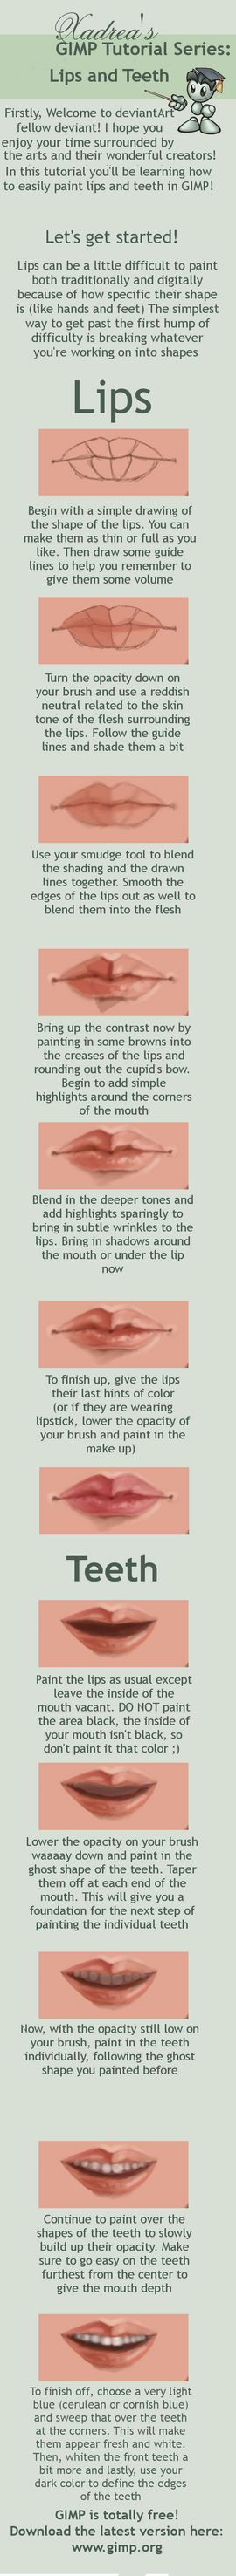 GIMP Tutorial: Lips